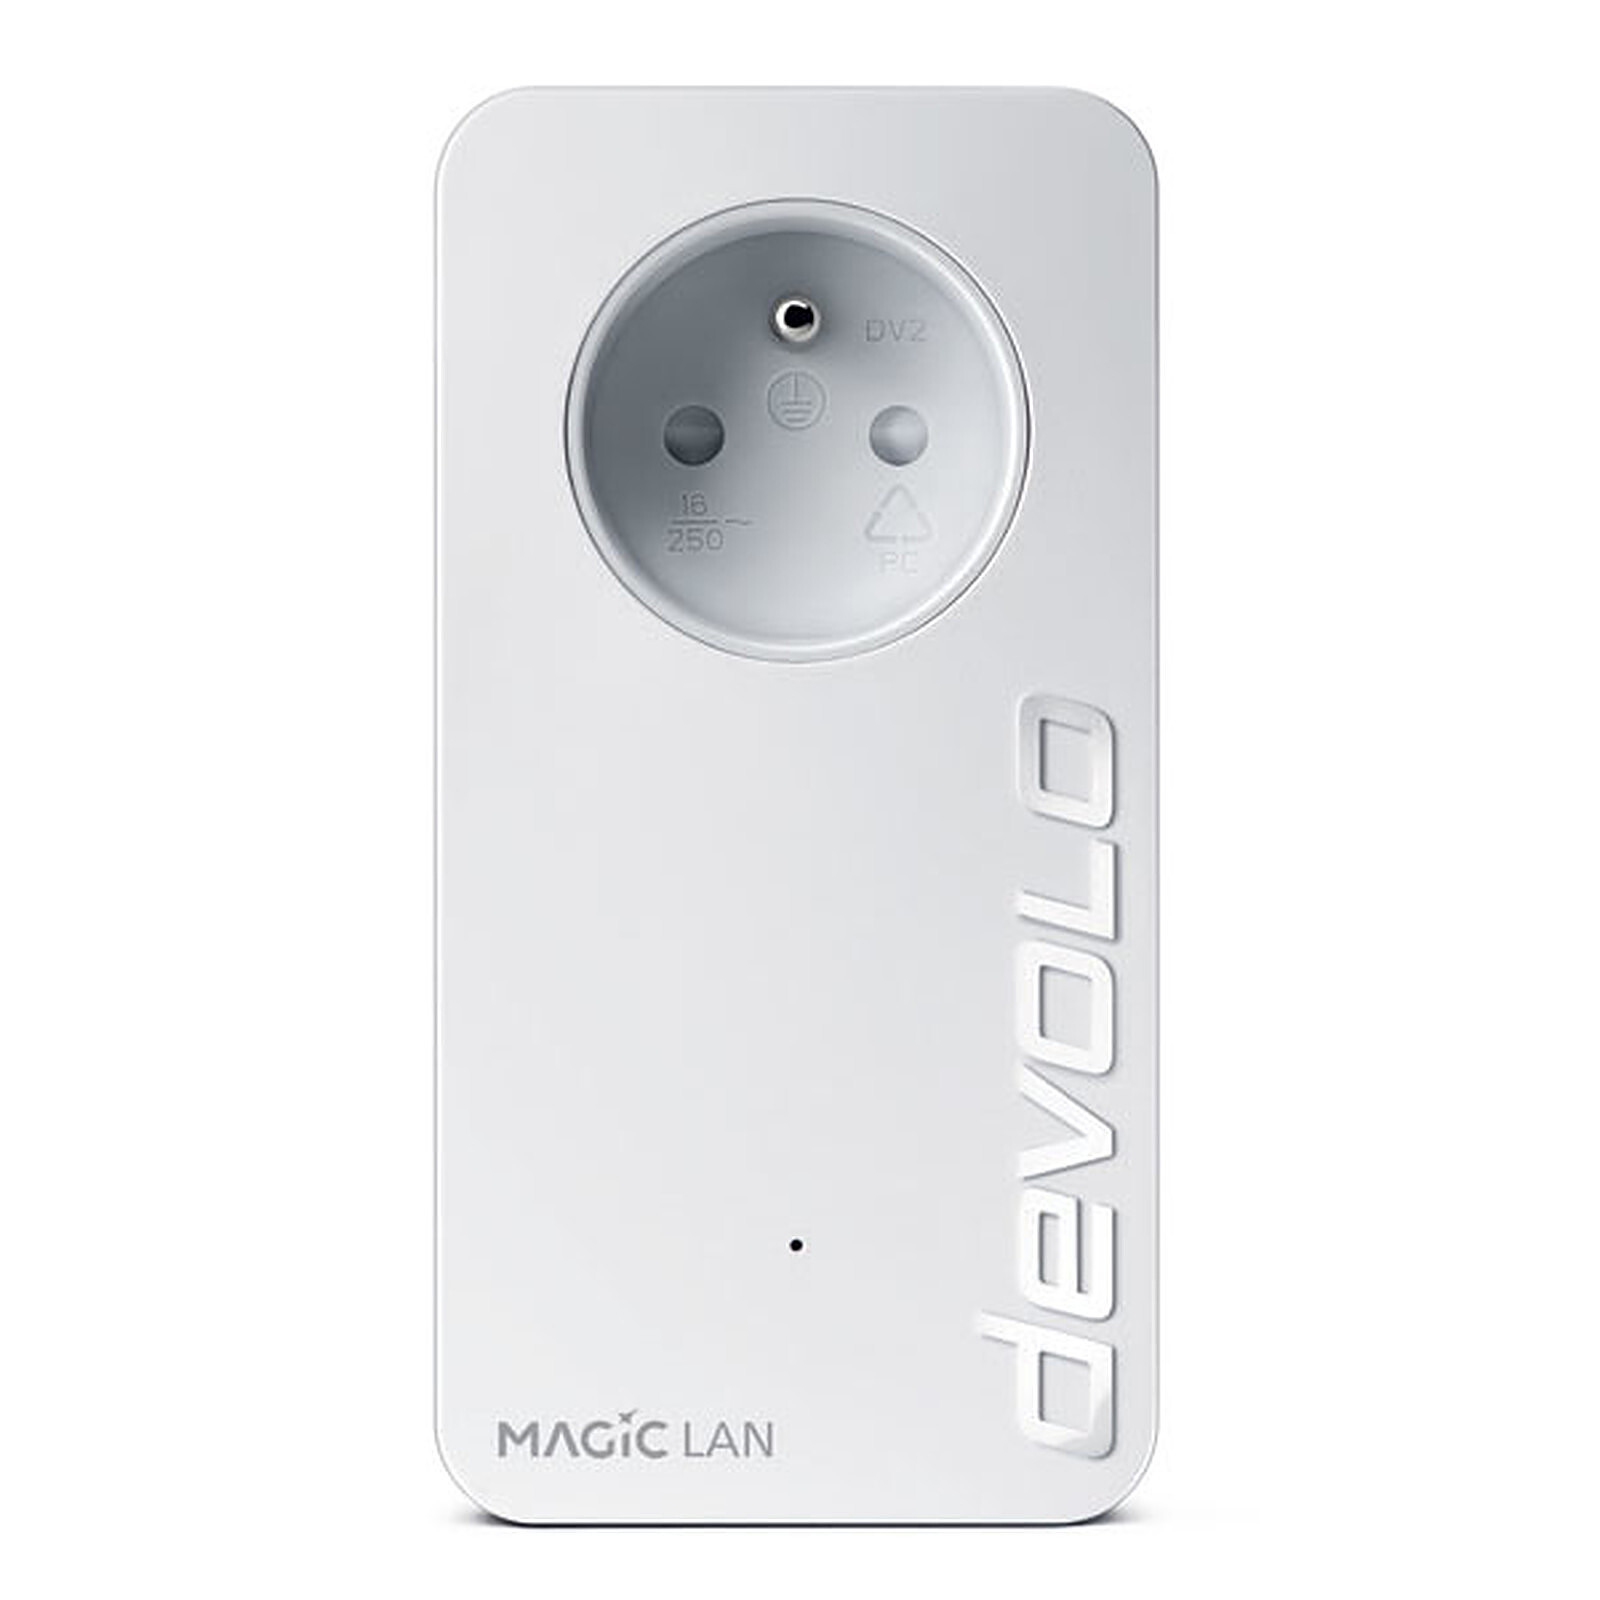 Devolo Kit multiroom Magic 2 WiFi 6 Mesh, CPL Blanc